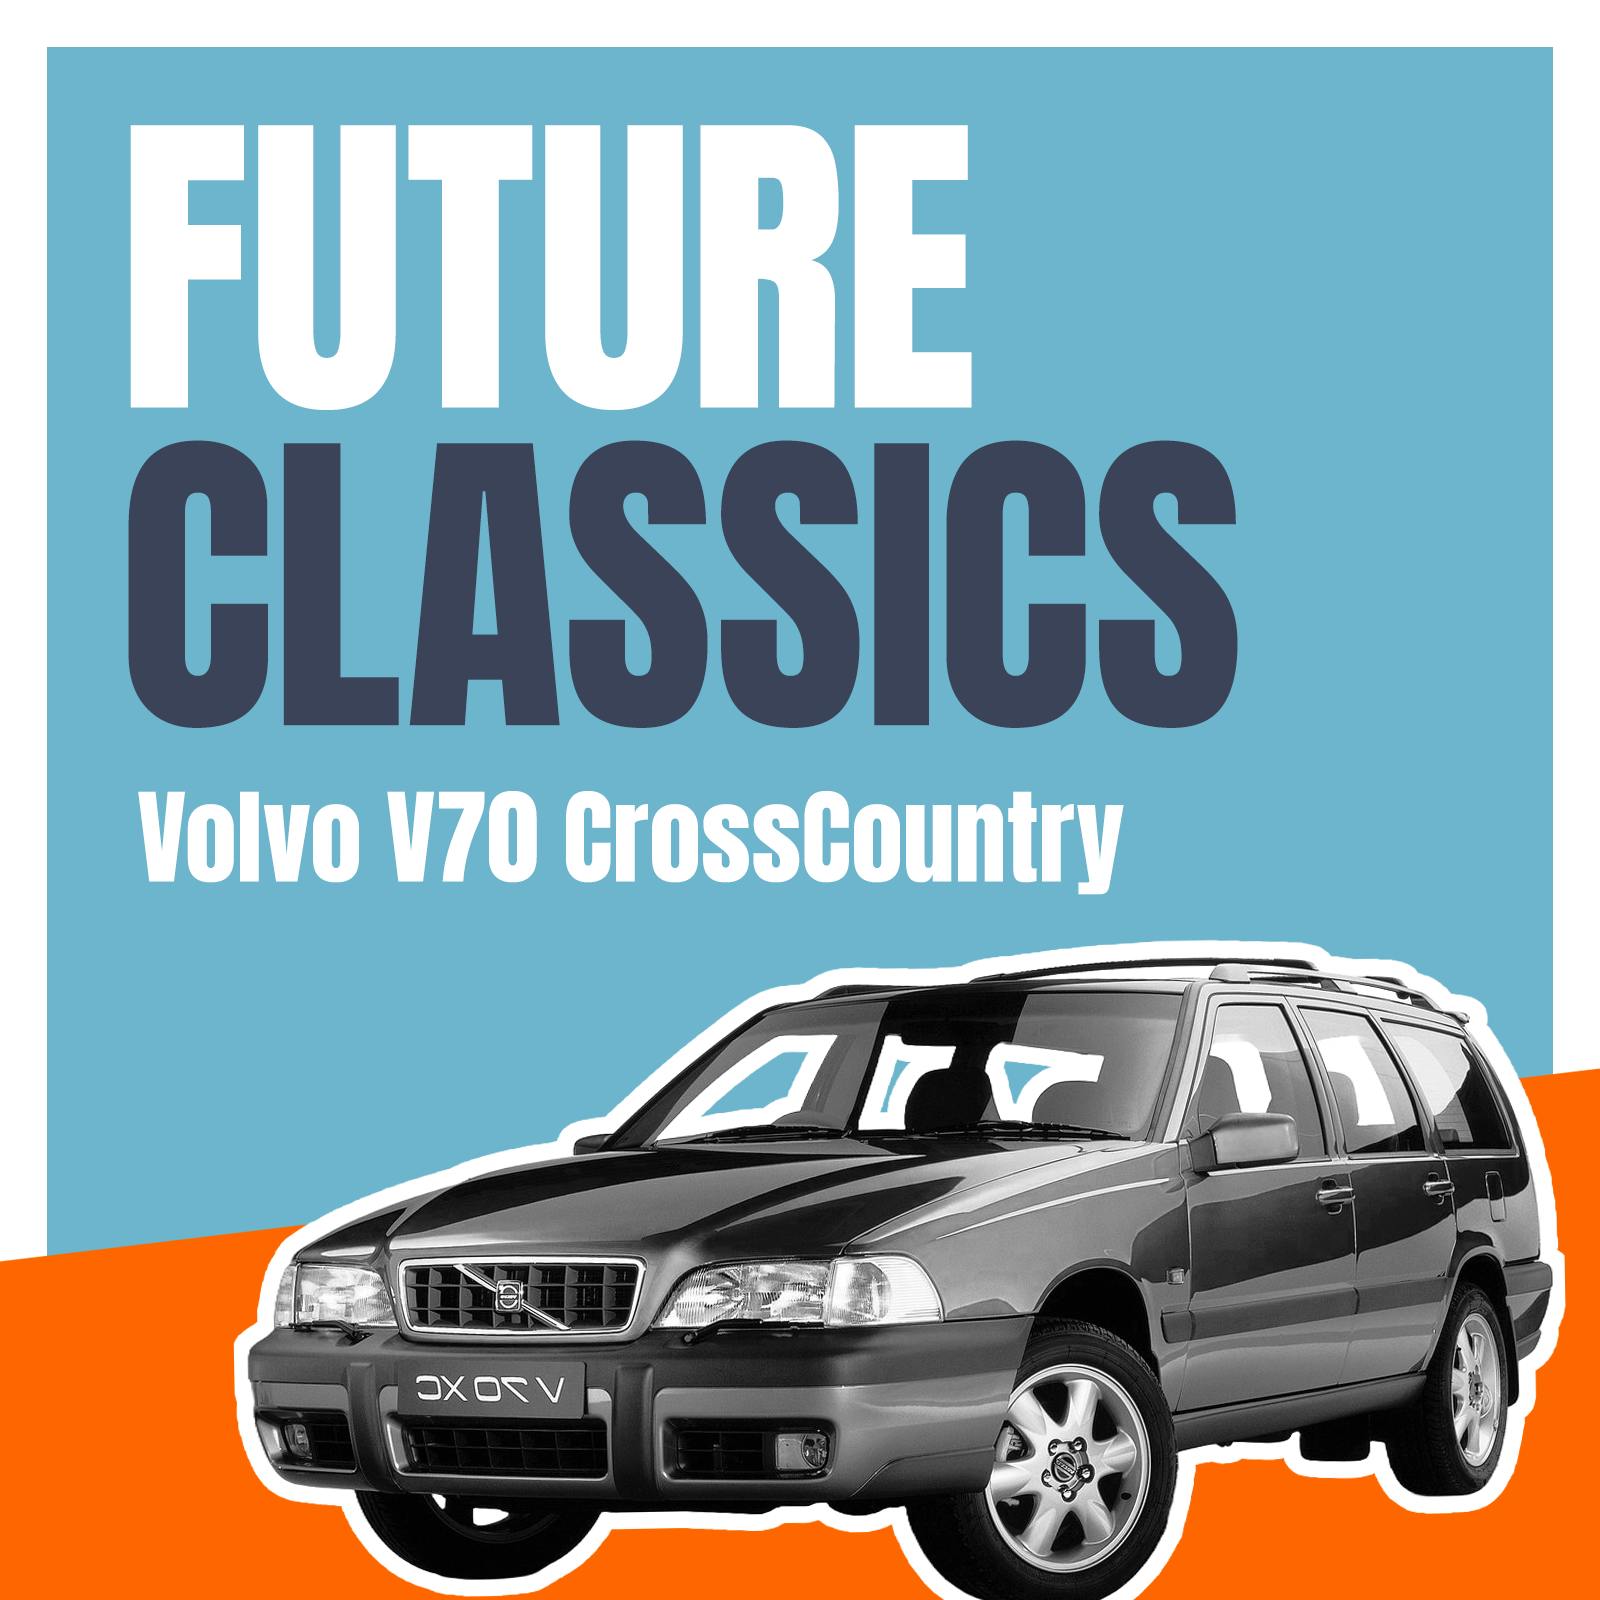 Volvo V70 CrossCountry – Folge 25